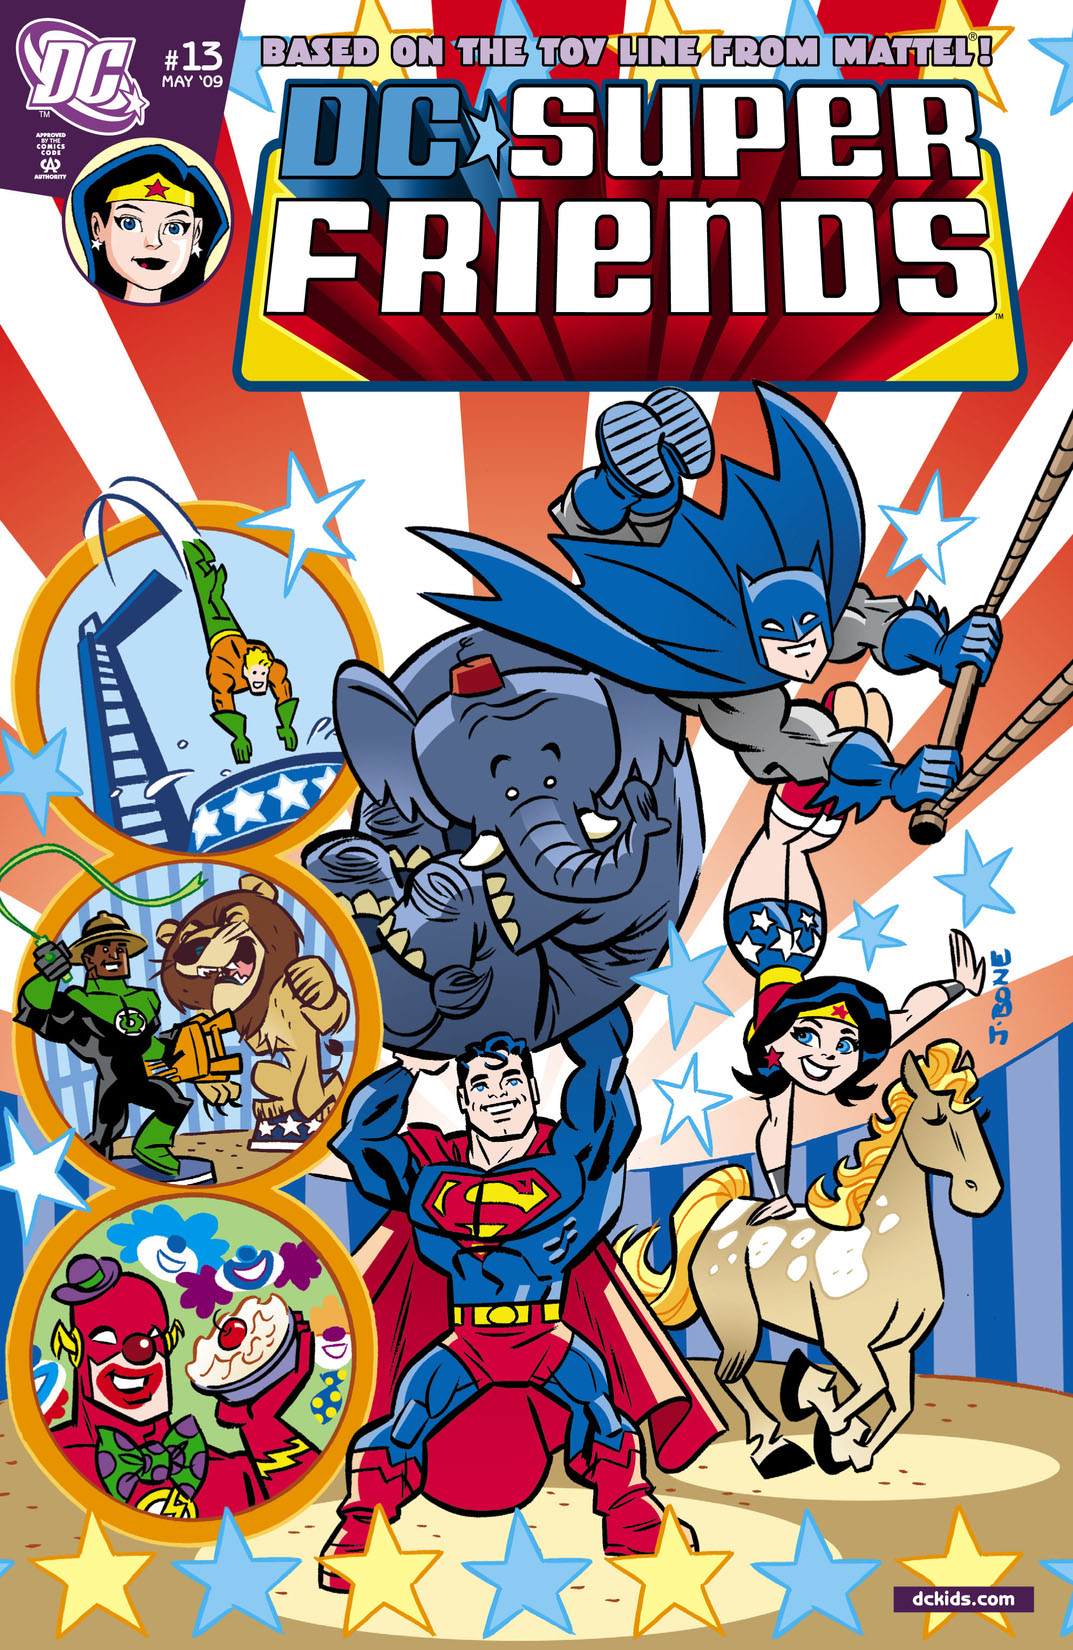 Super Friends (2008-) #13 preview images